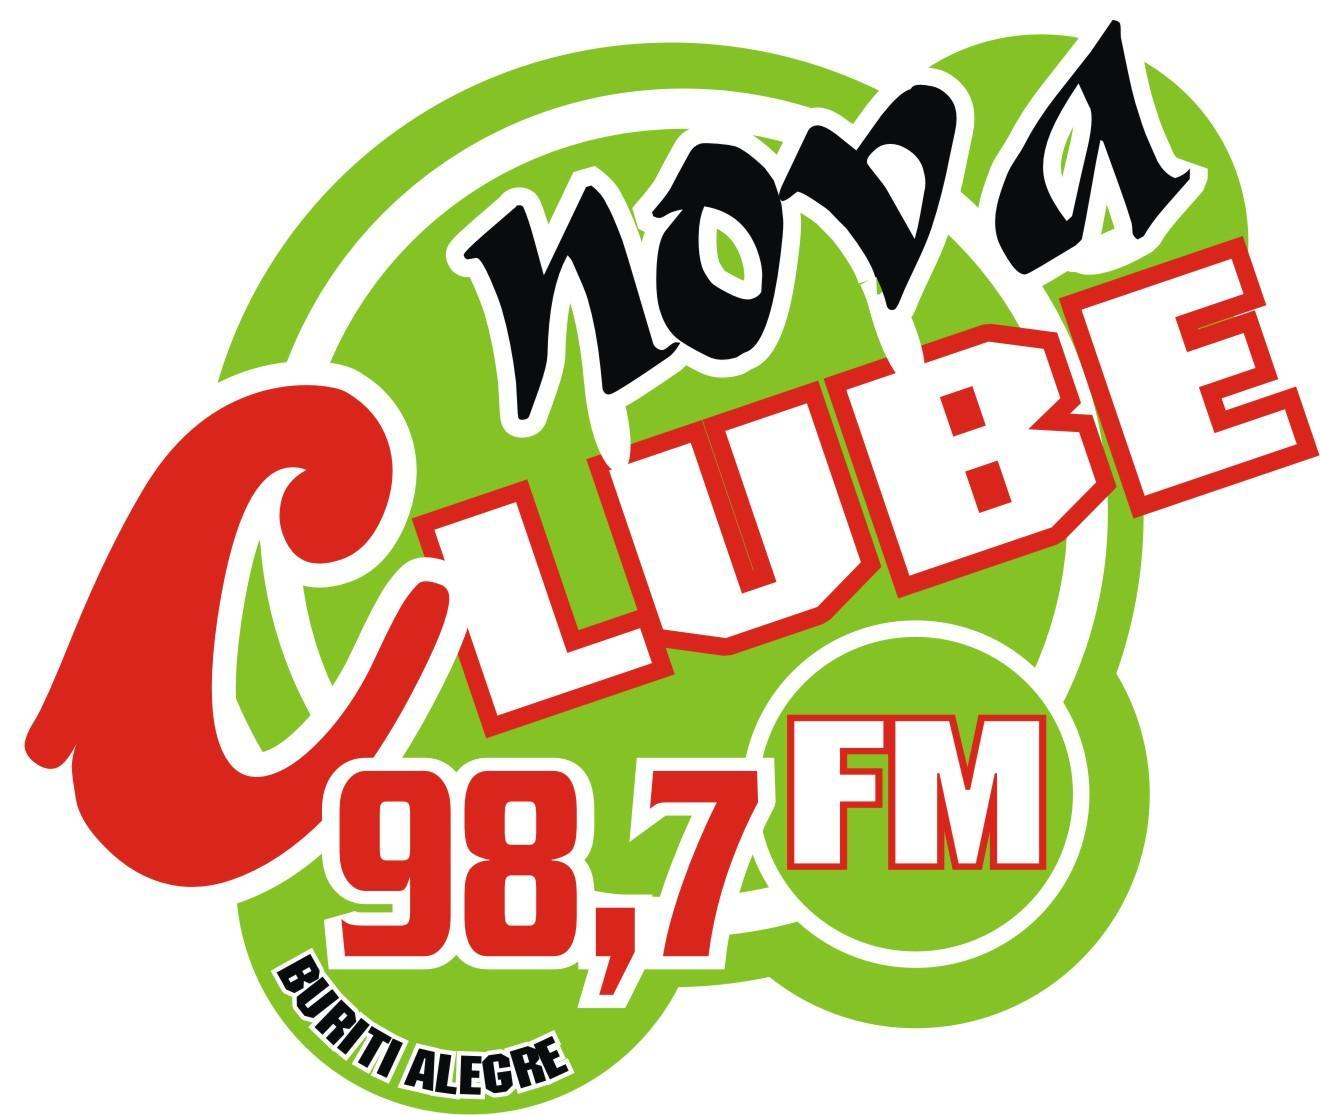 Rádio Nova Clube FM 98,7